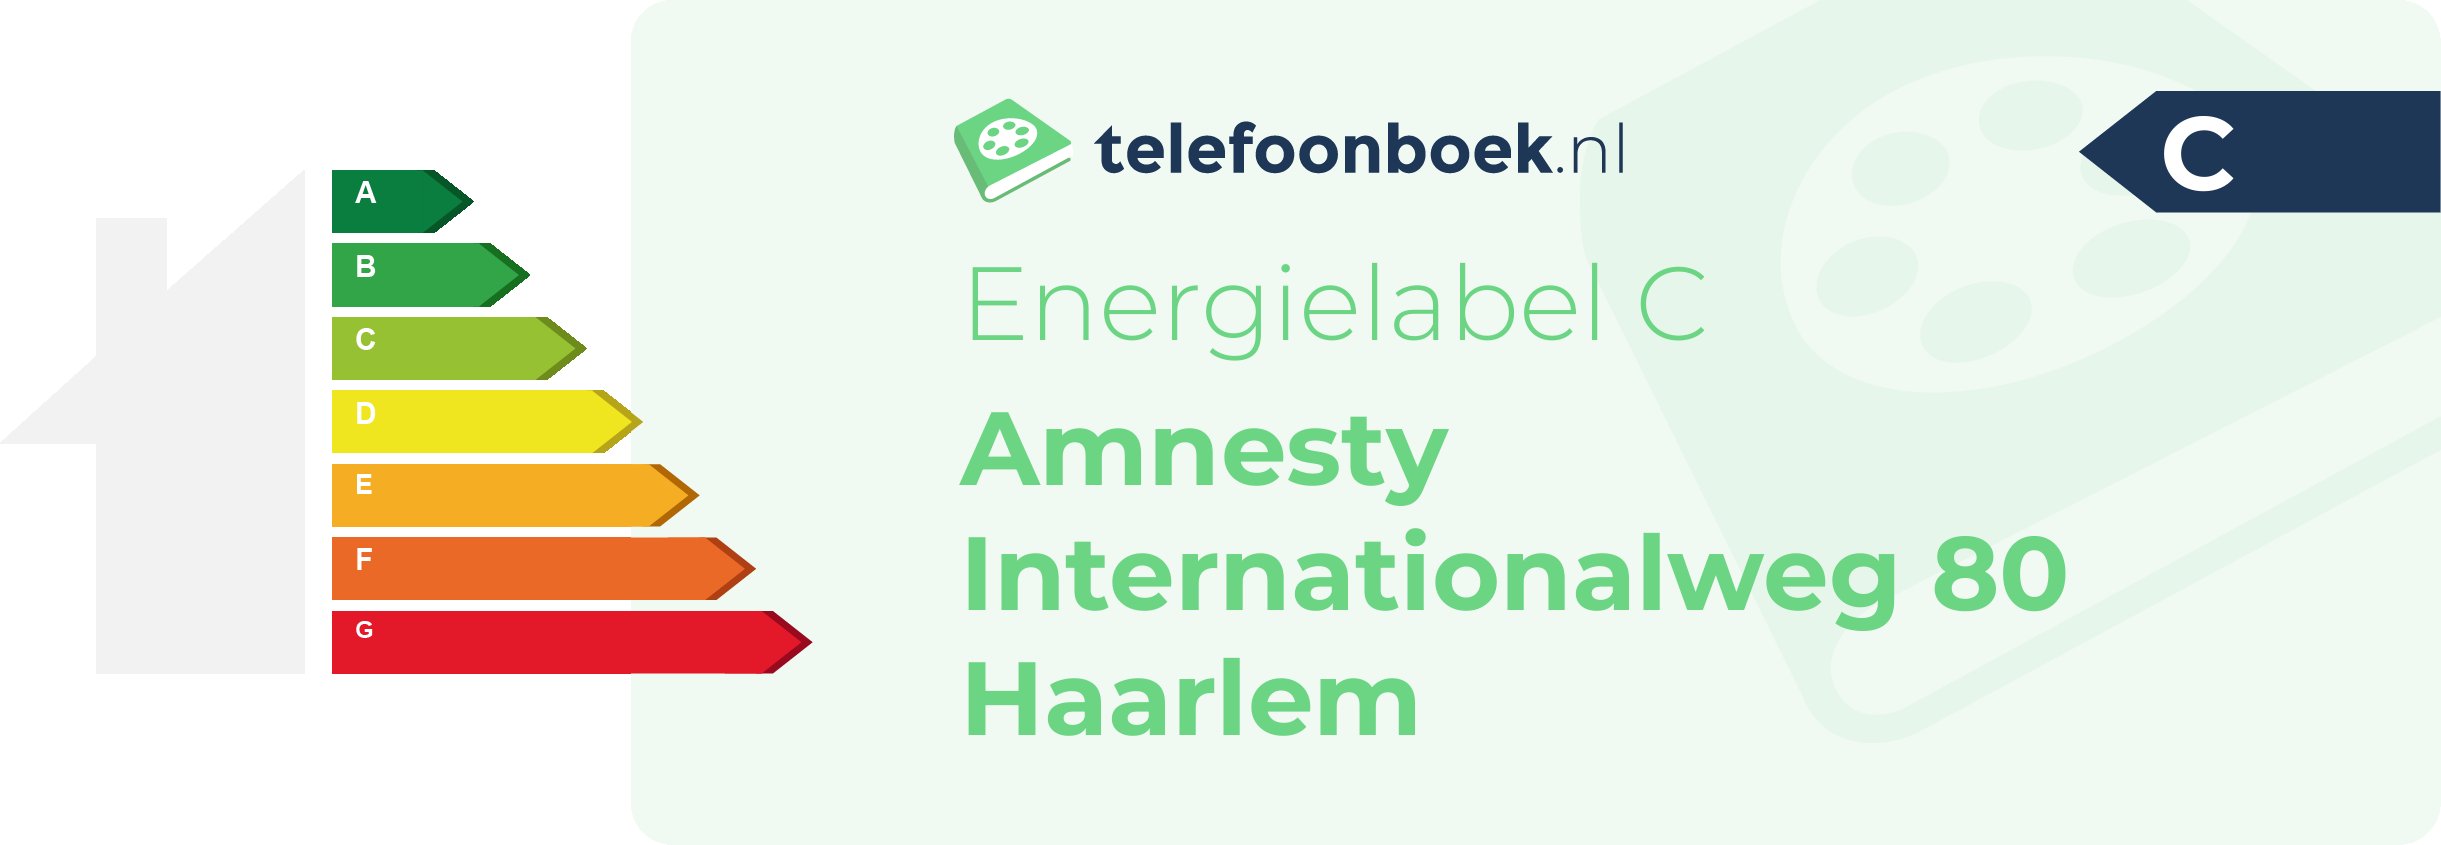 Energielabel Amnesty Internationalweg 80 Haarlem